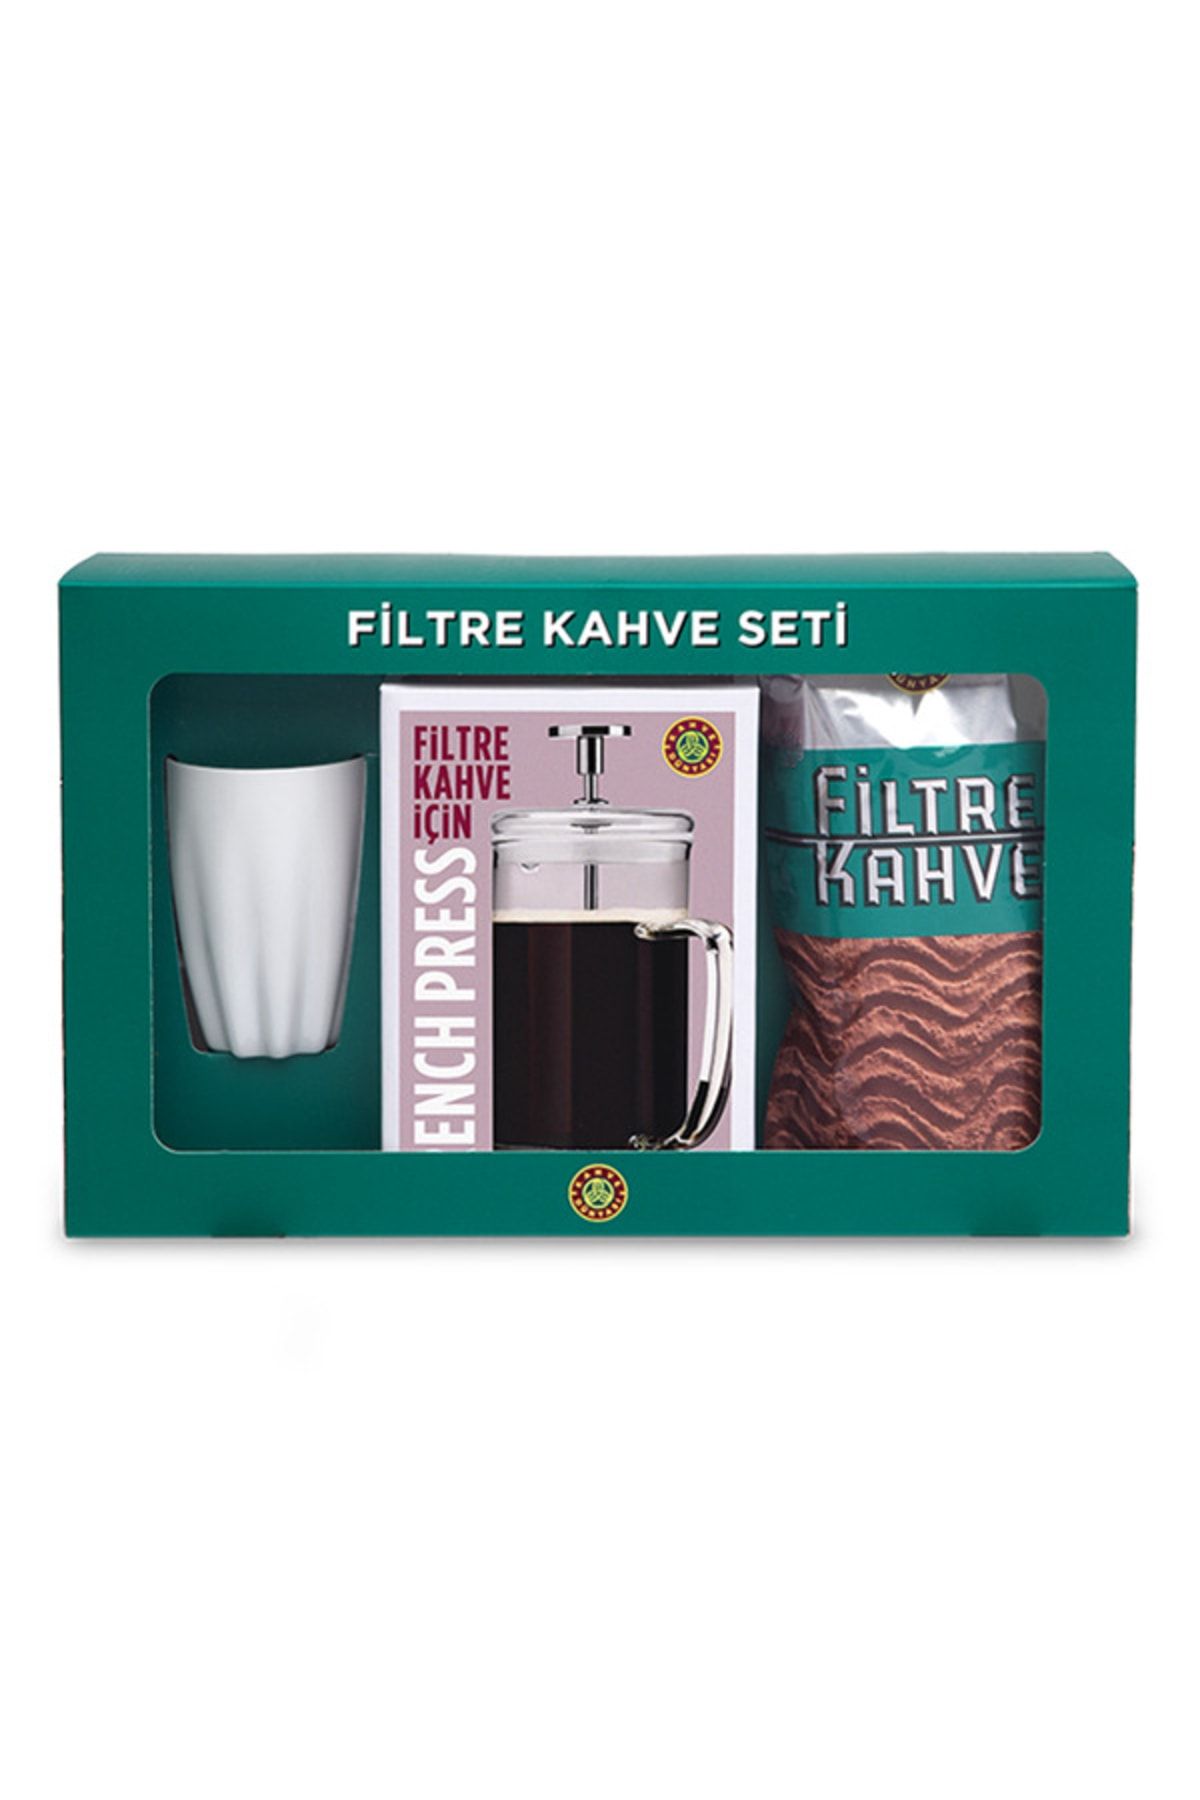 Kahve Dünyası Filtre Kahve Keyif Seti French Press Ve Filitre Kahve Ikilisi